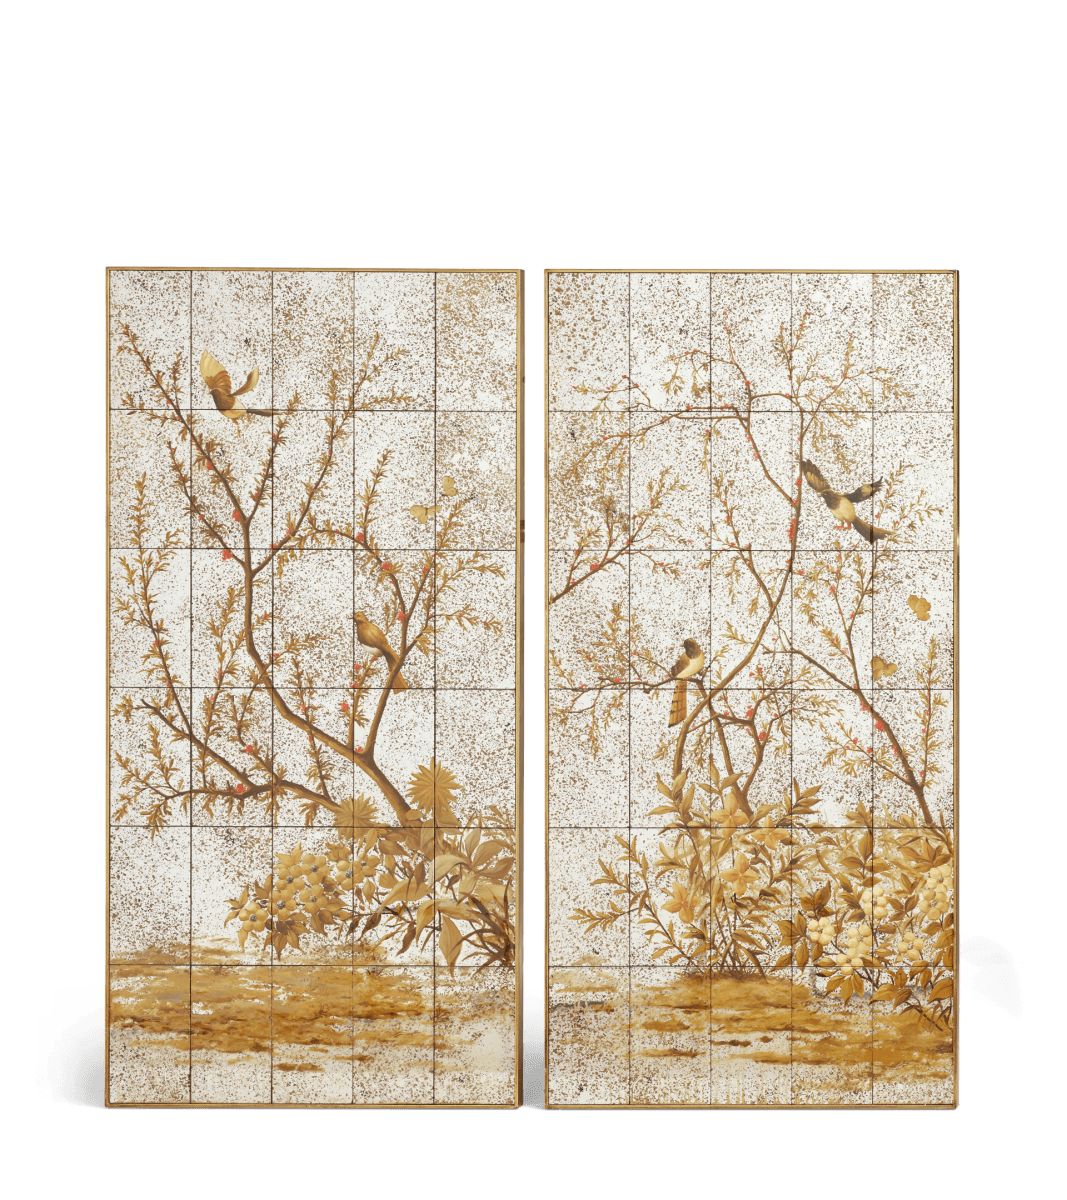 Phaethon Mirrored Wall Art Panels – Antique Gold | OKA US